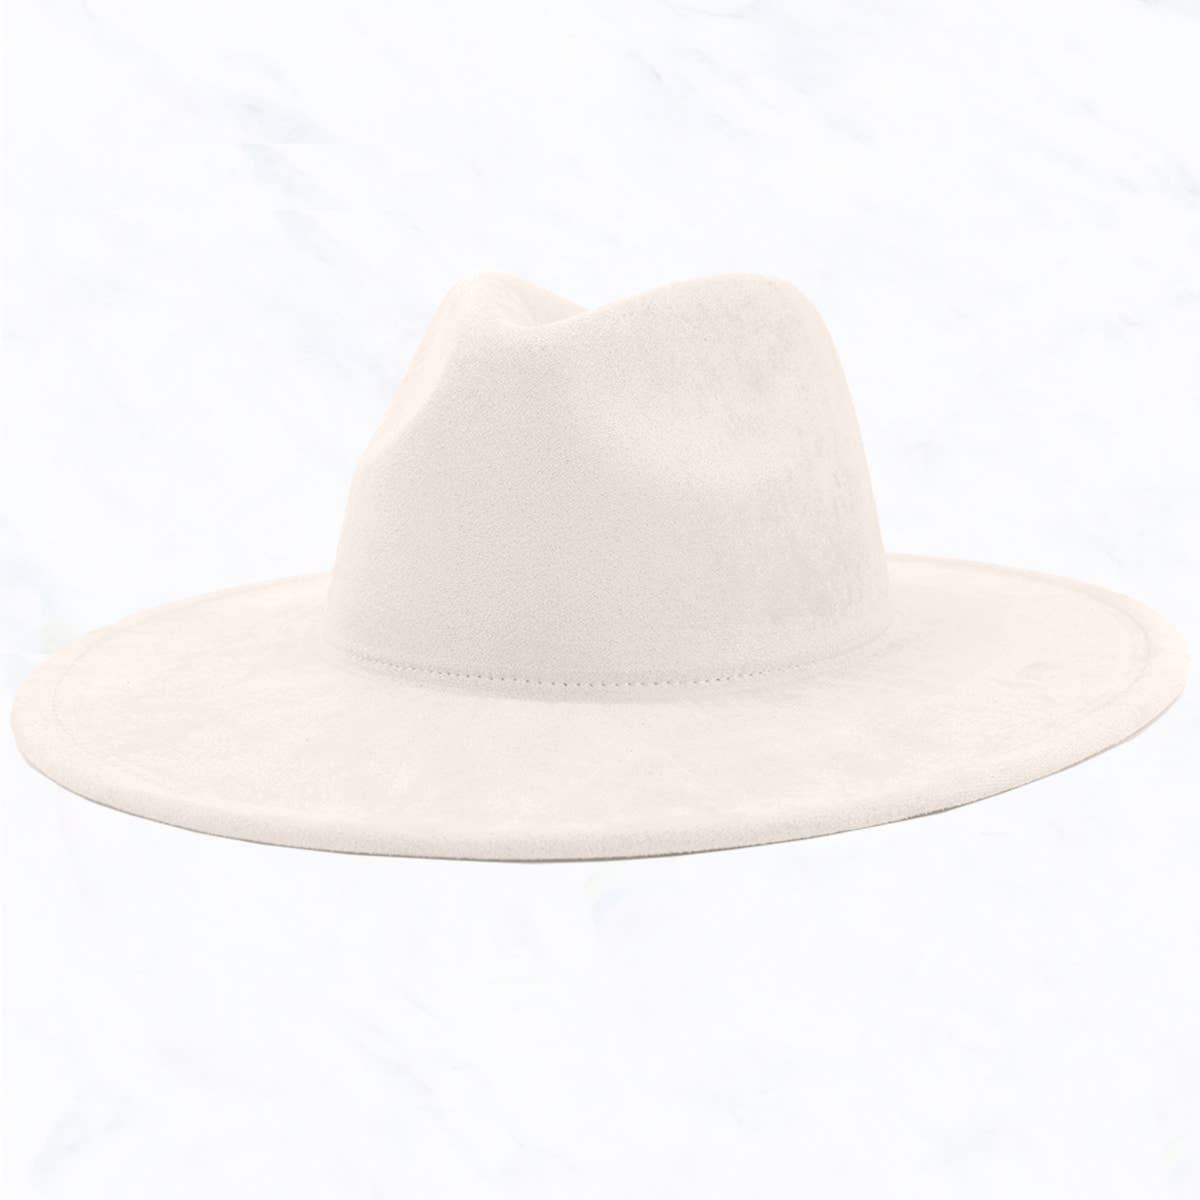 Suzie Q USA - Suede Large Eaves Peach Top Fedora Hat